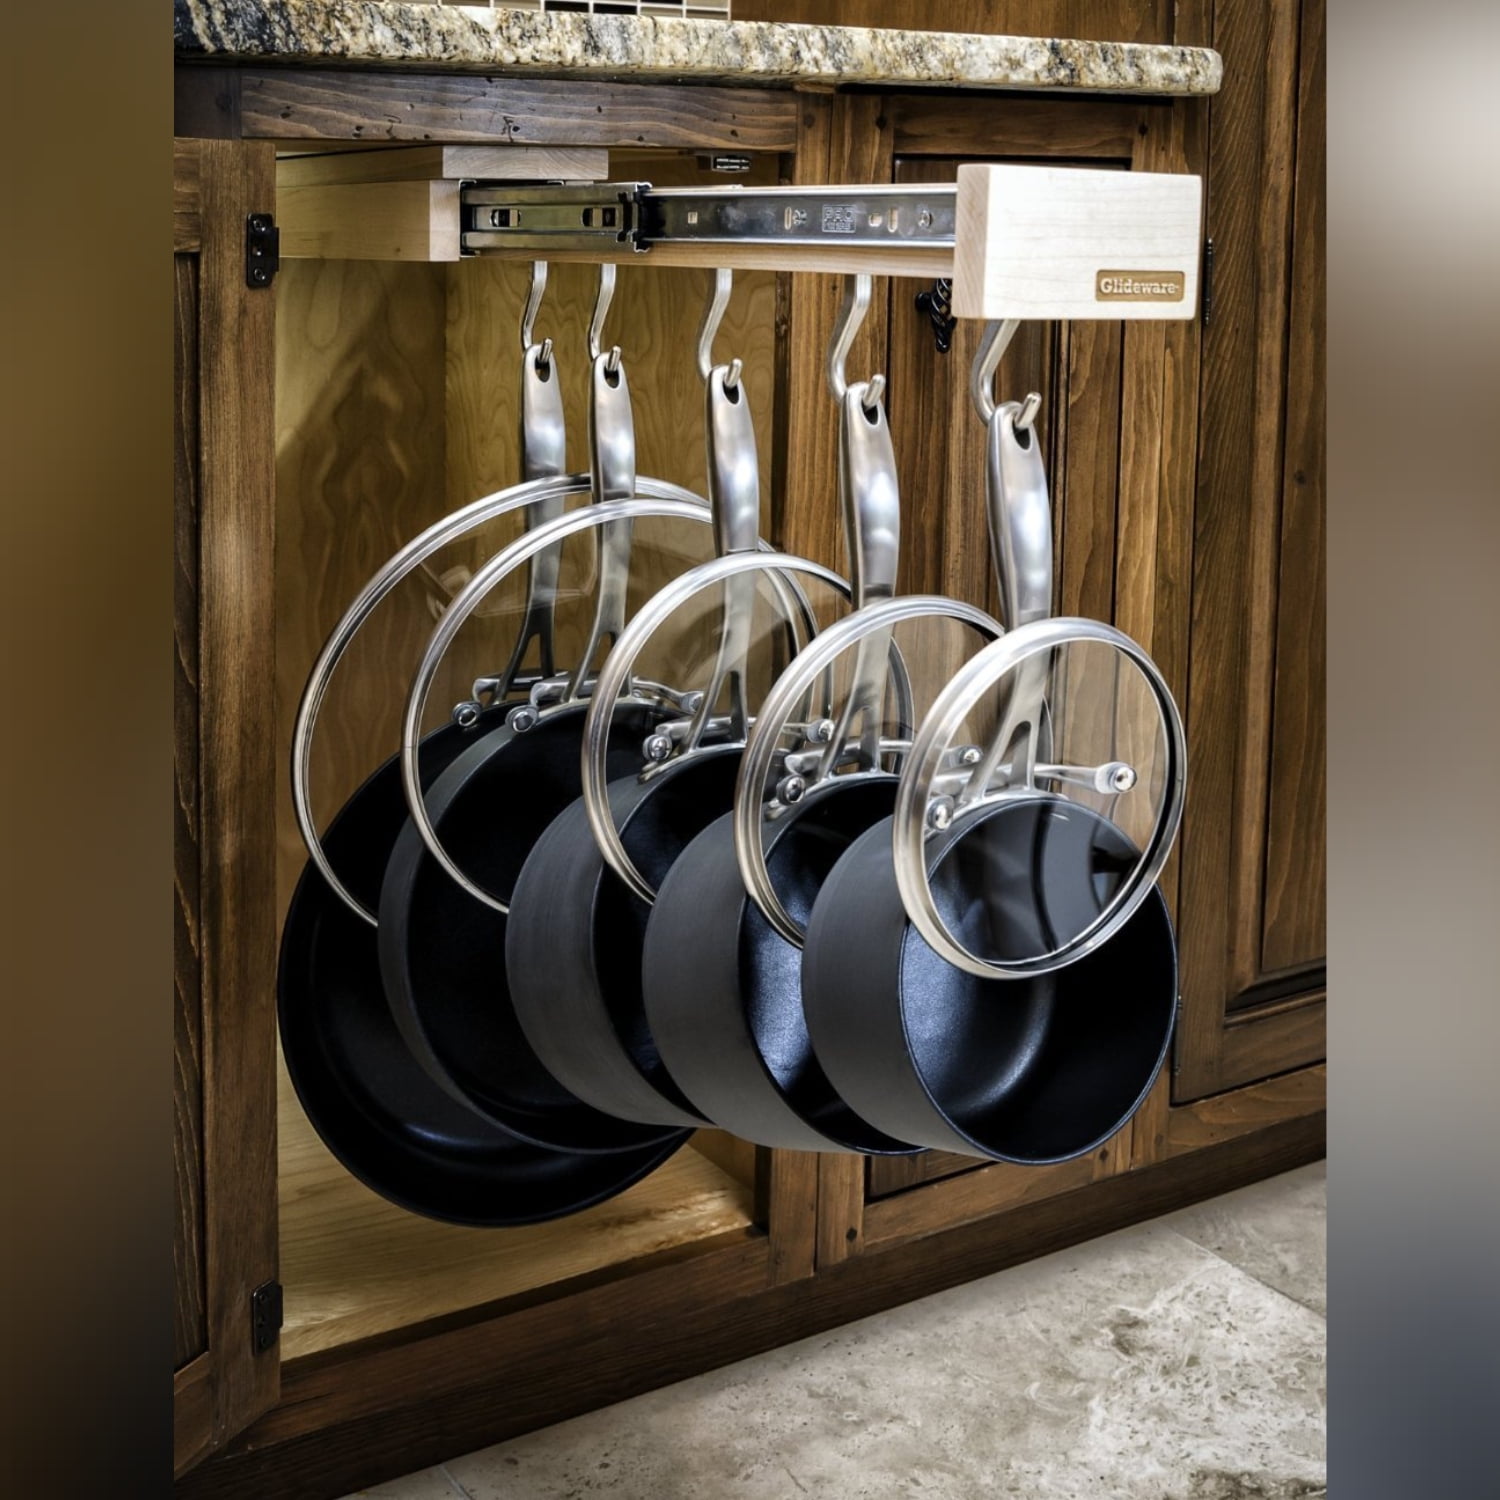 Hanging Kitchen Cabinet Pan Rack Shelf Cookware Organizer Pot Lid Holder Storage 